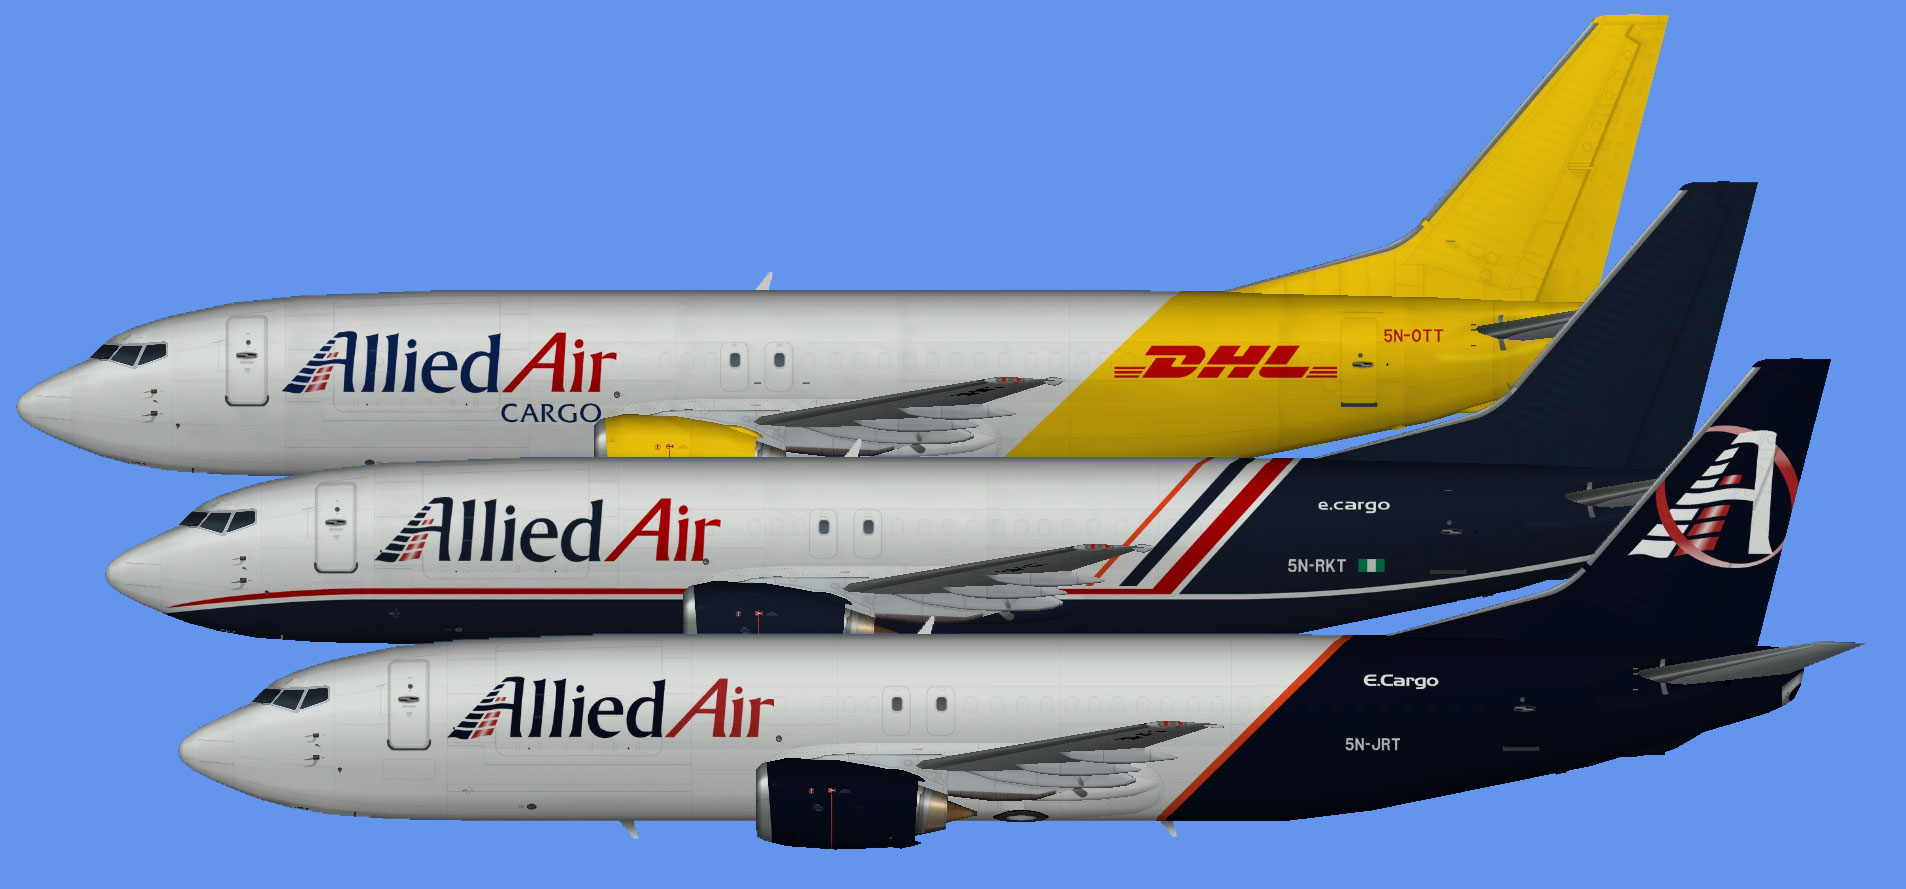 Allied Air Boeing 737-400